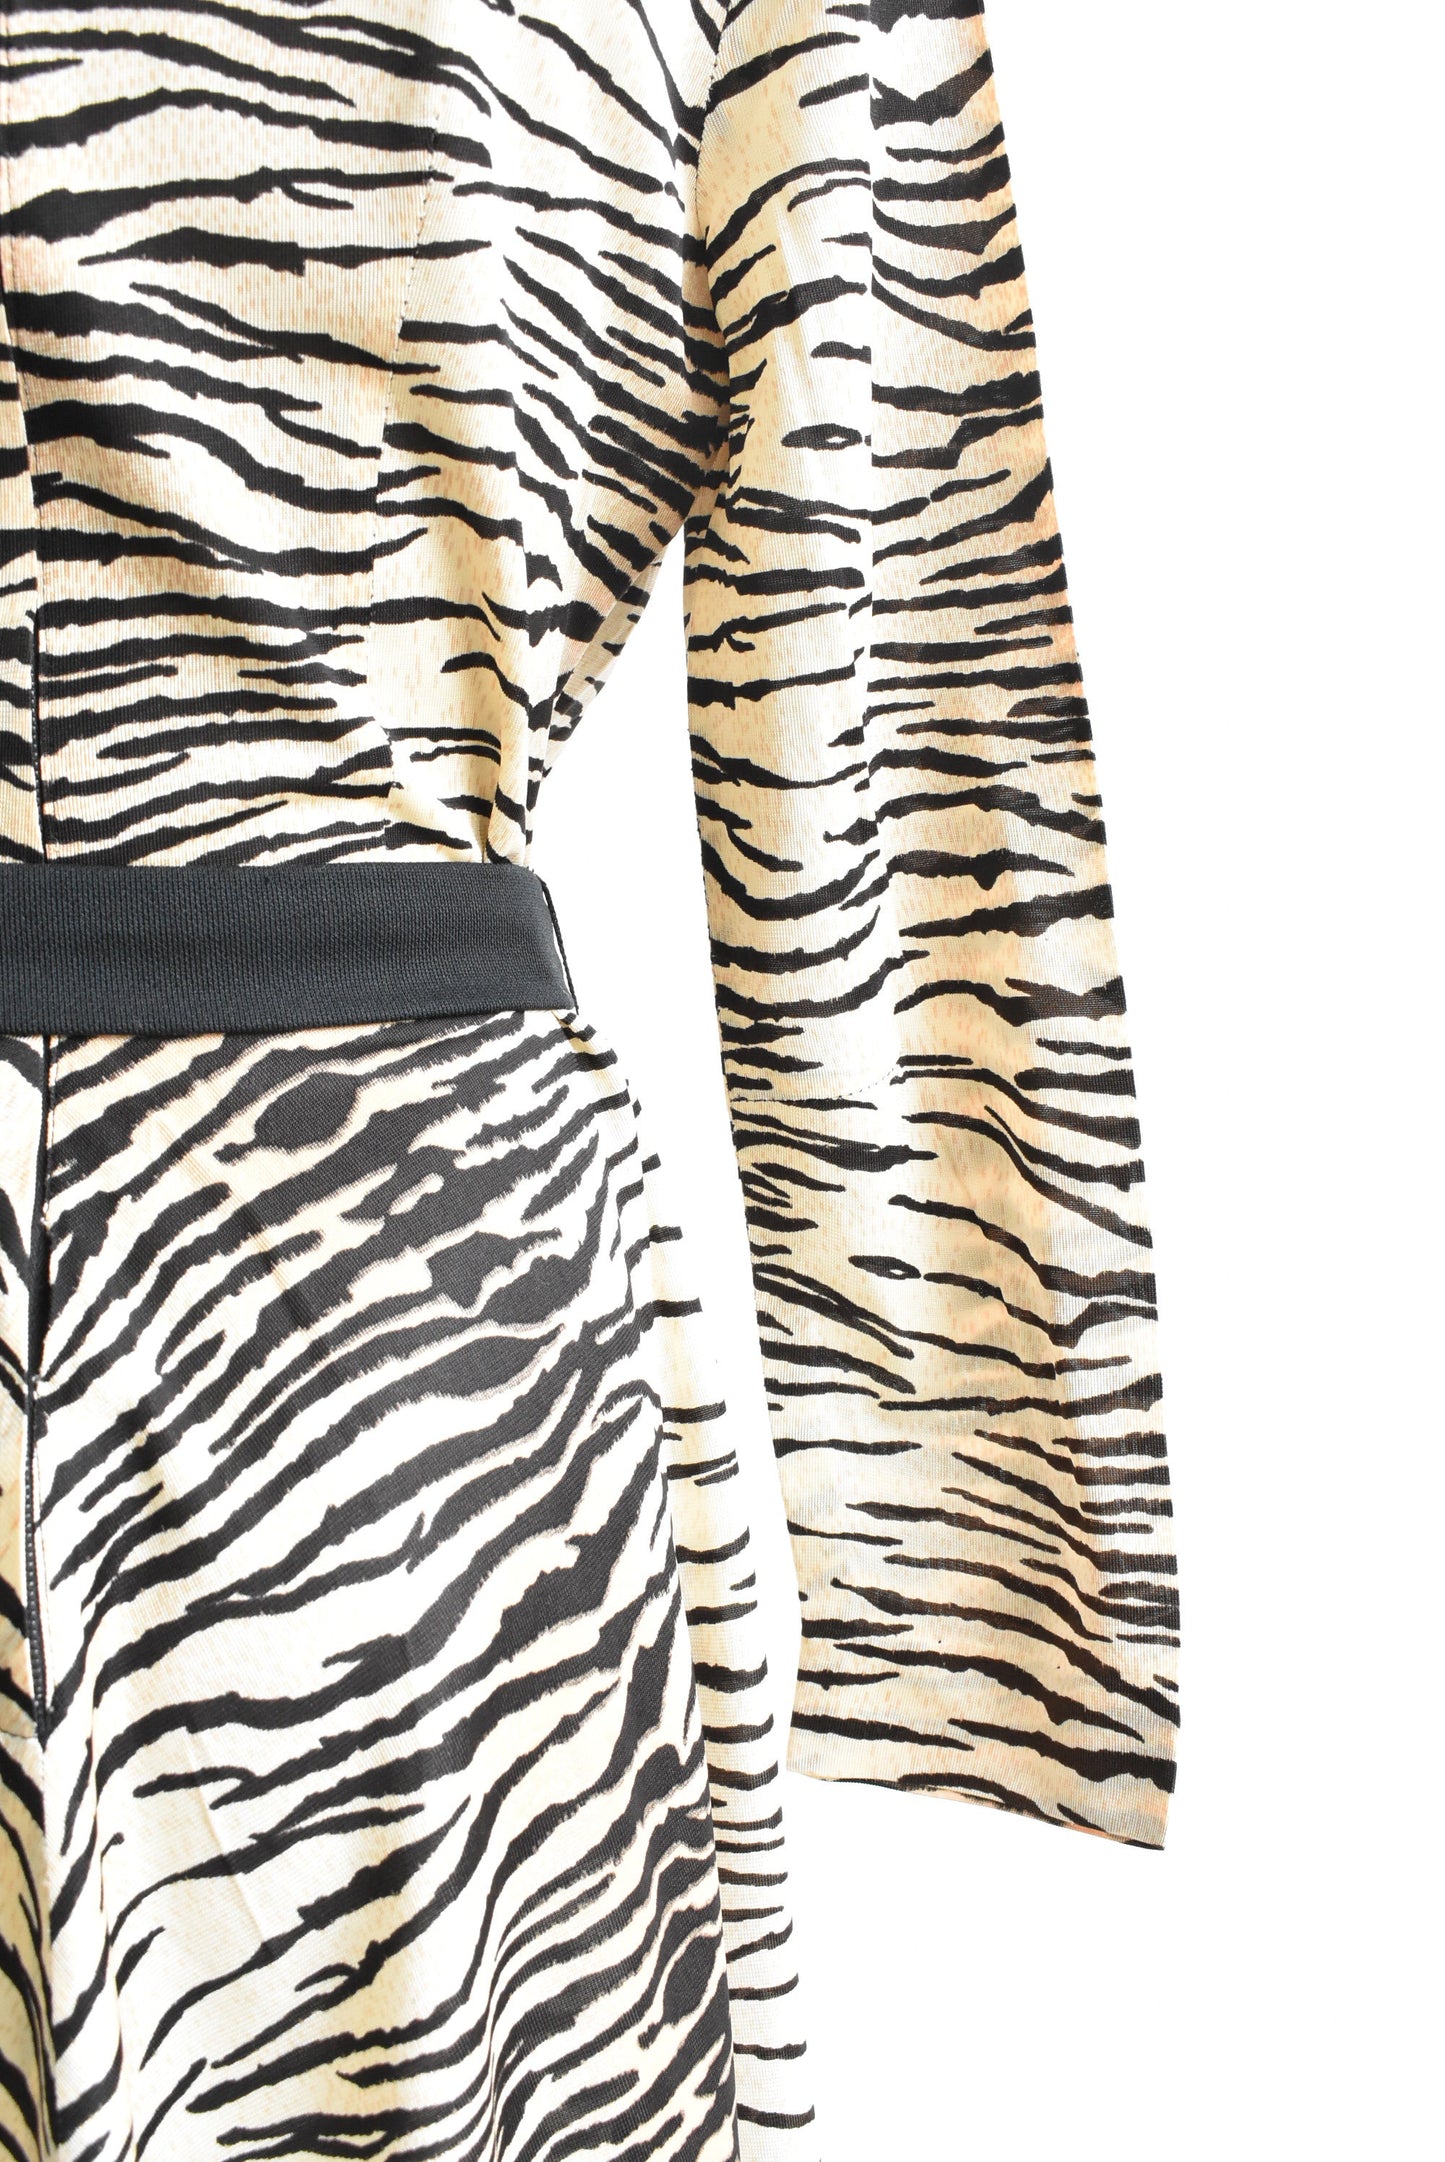 Retro zebra print dress (XS)